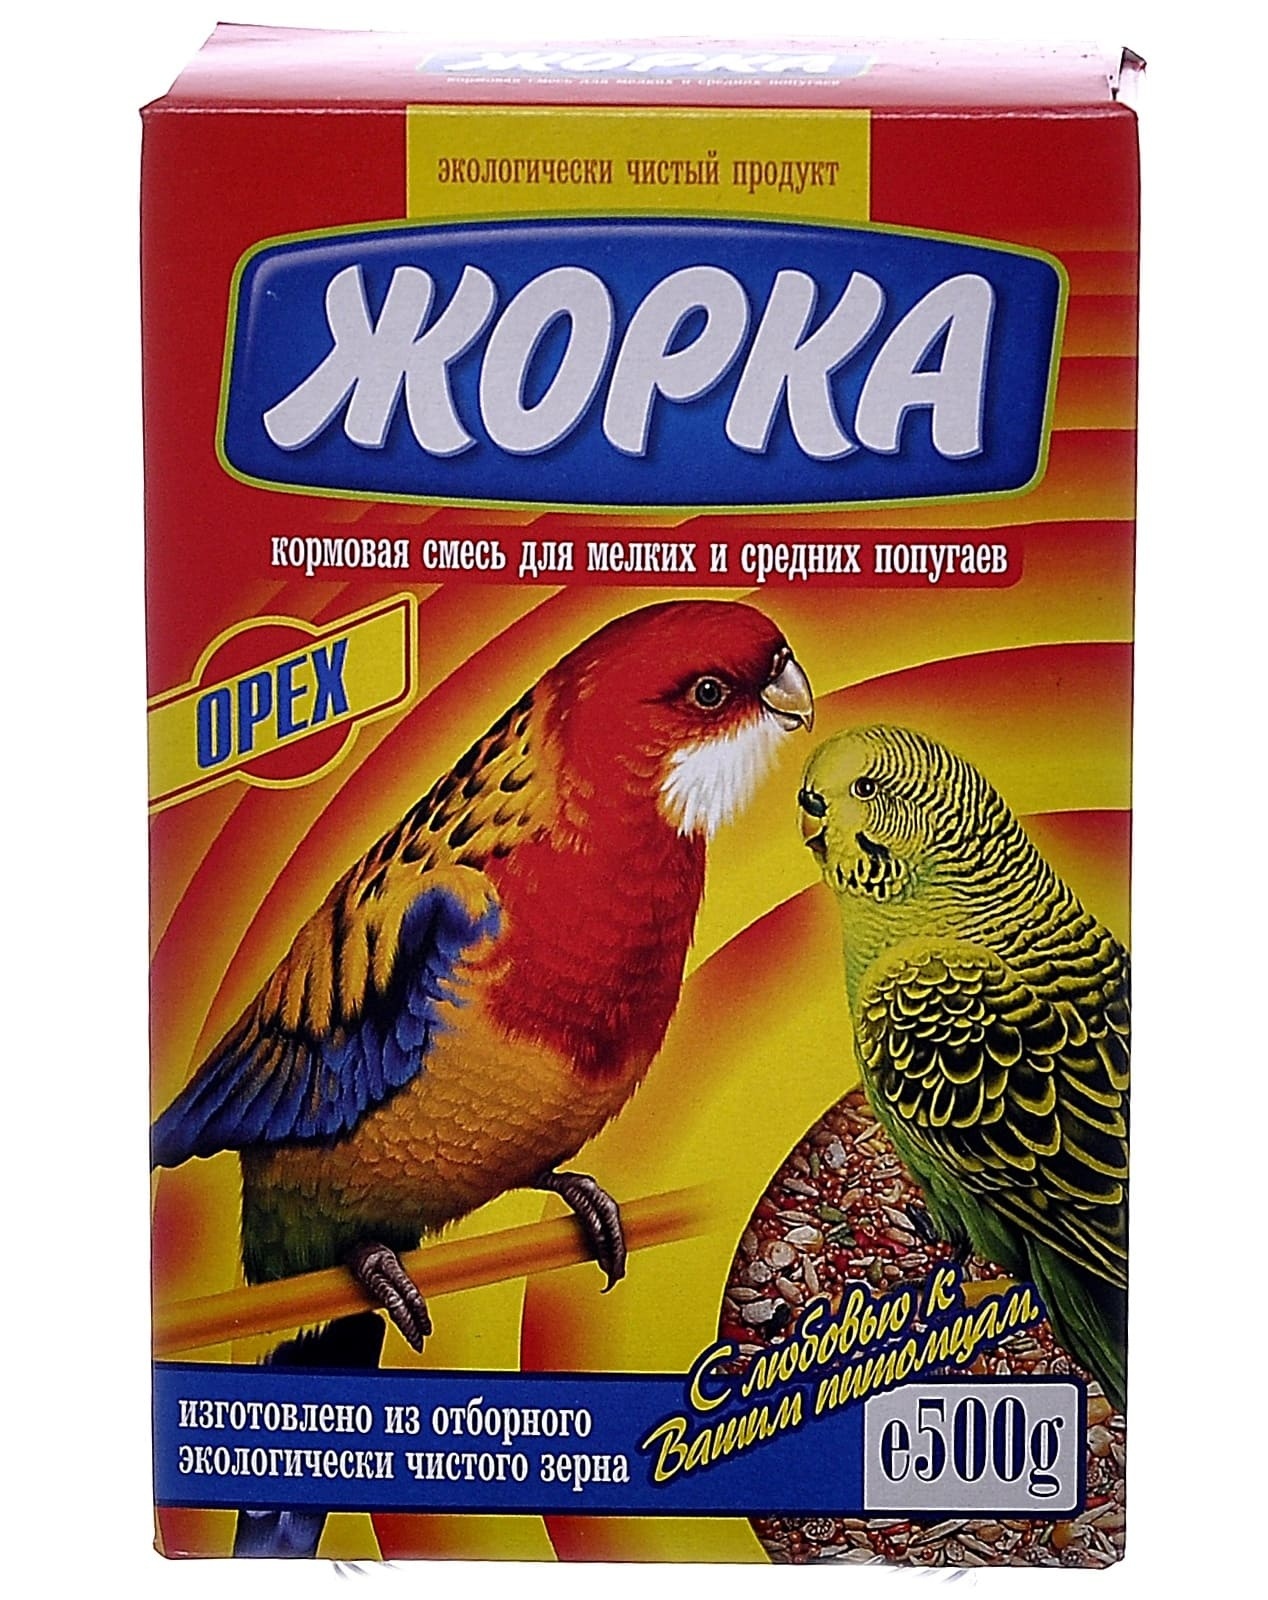 цена Жорка Жорка для мелких и средних попугаев с орехами (коробка) (500 г)